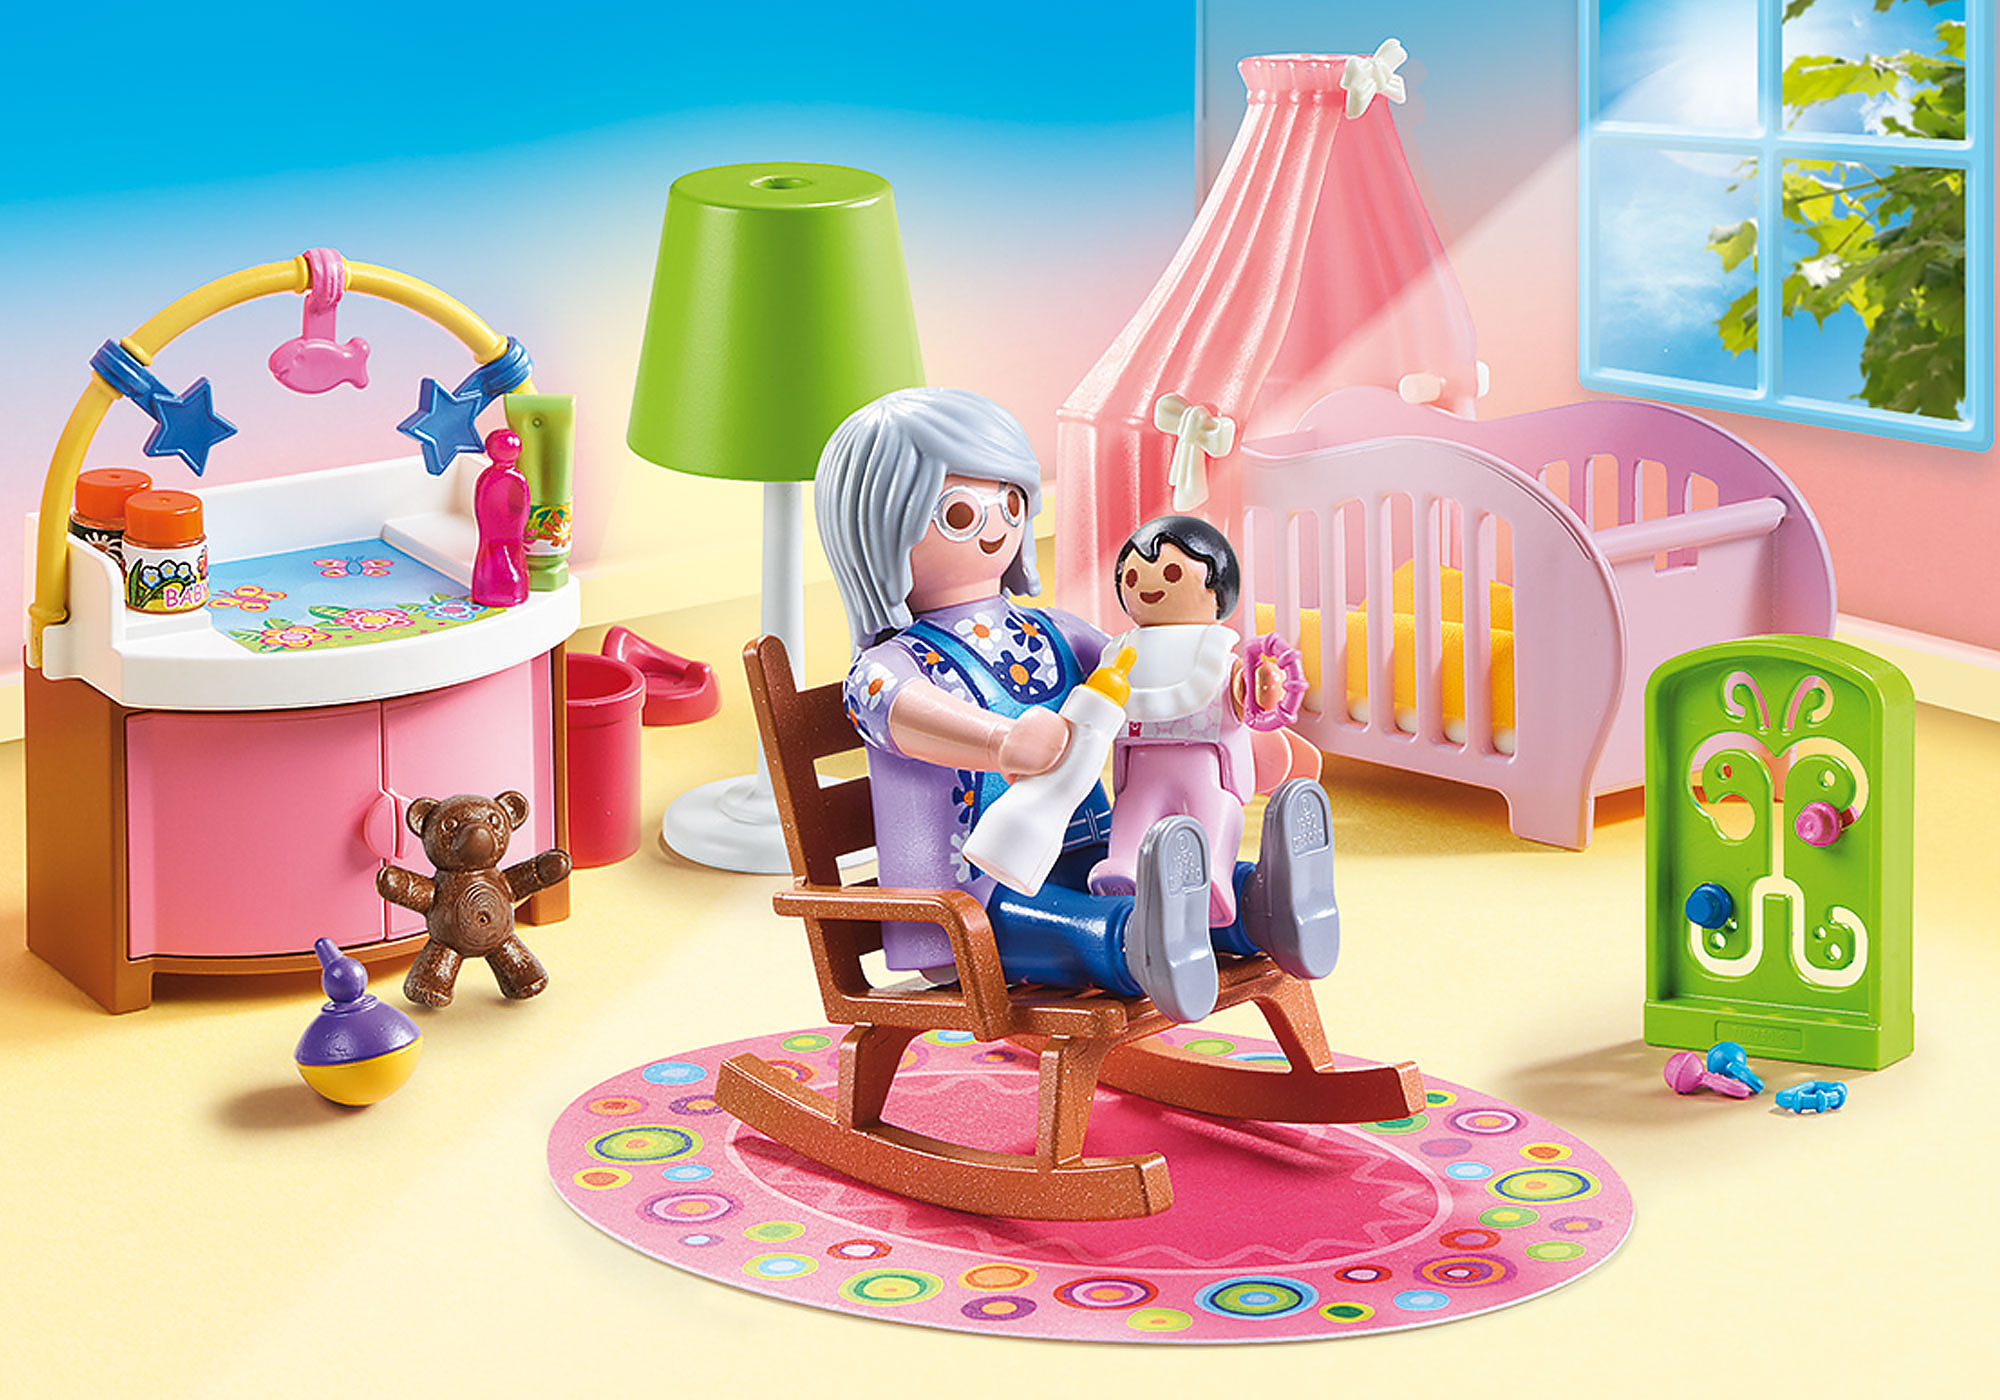 5167 - Playmobil Dollhouse - Maison transportable Playmobil : King